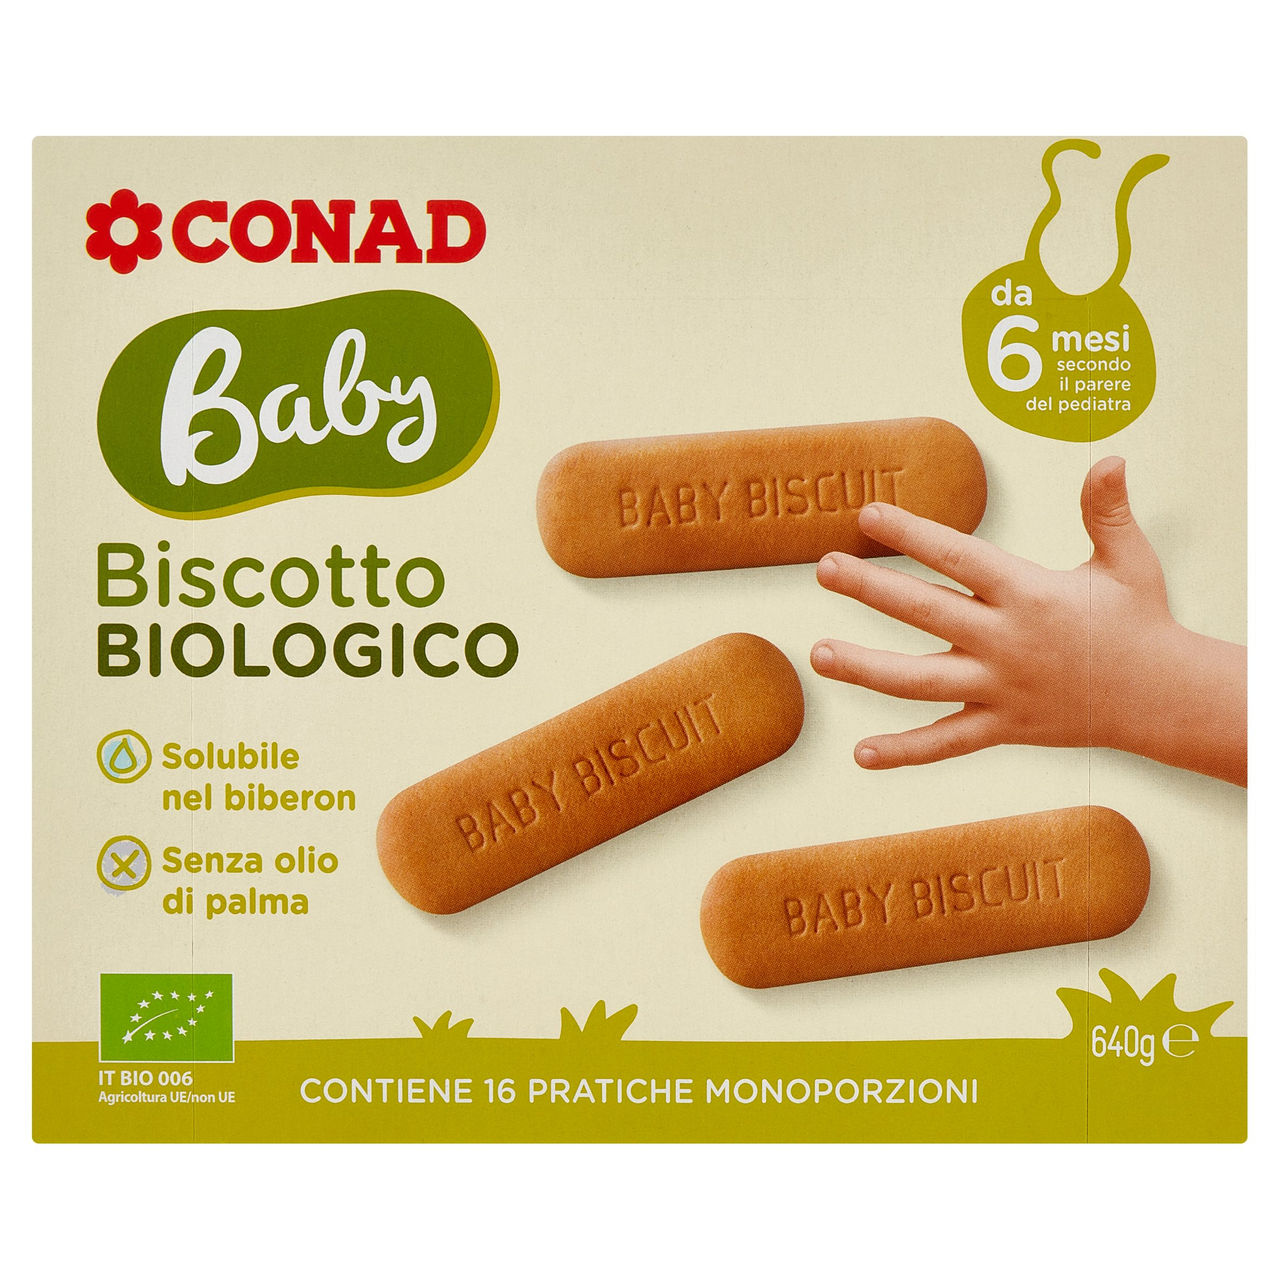 Baby Biscotto Biologico Conad in vendita online